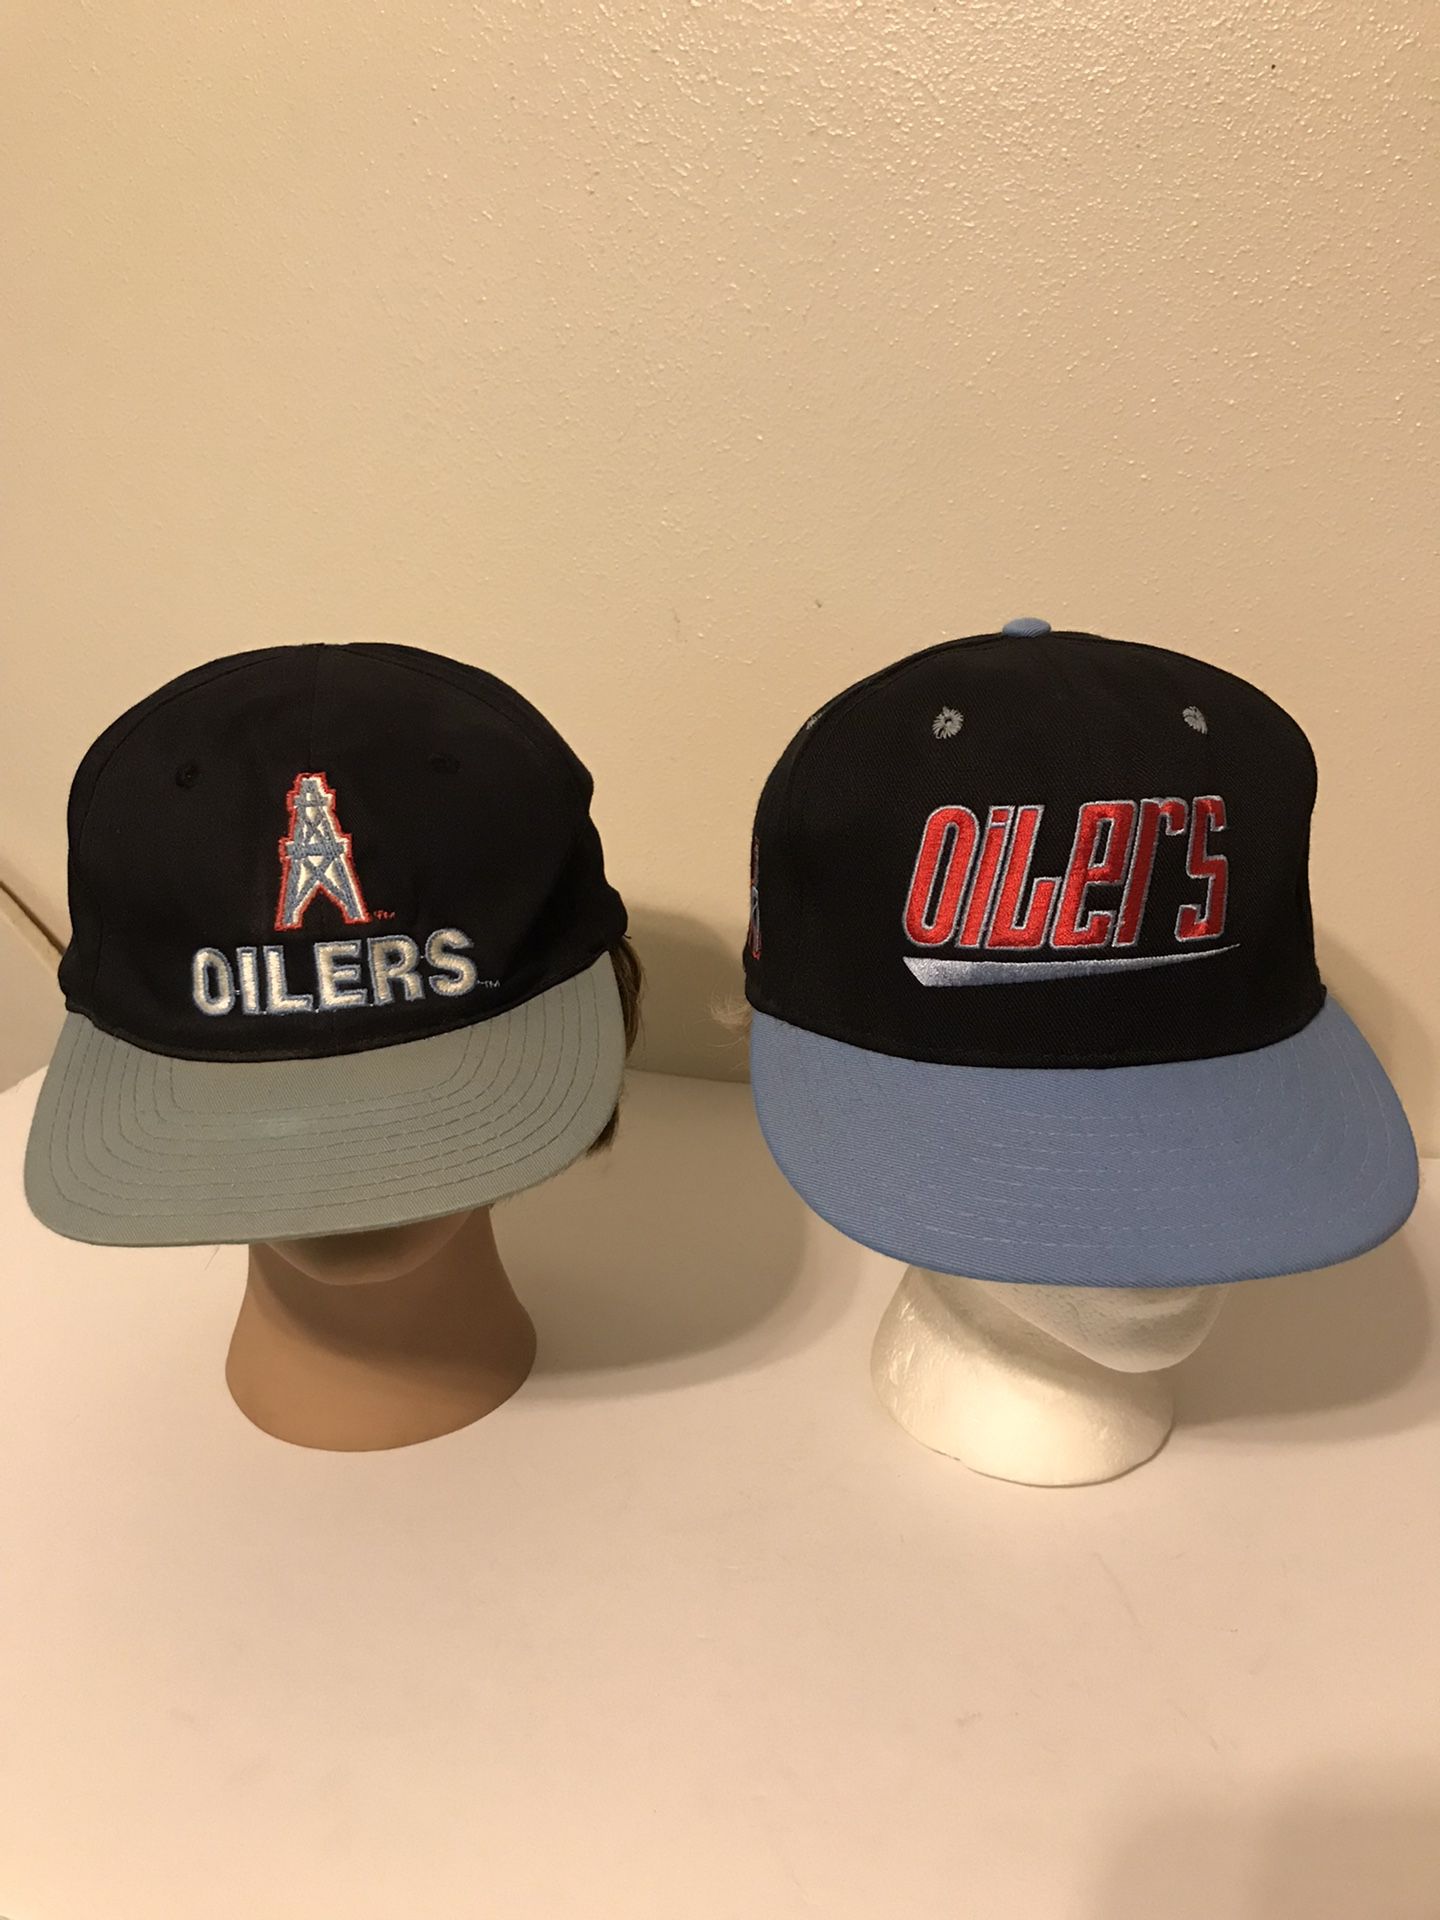 Two Vintage Houston Oilers SnapBack Style Adjustable Hats Both Team NFL